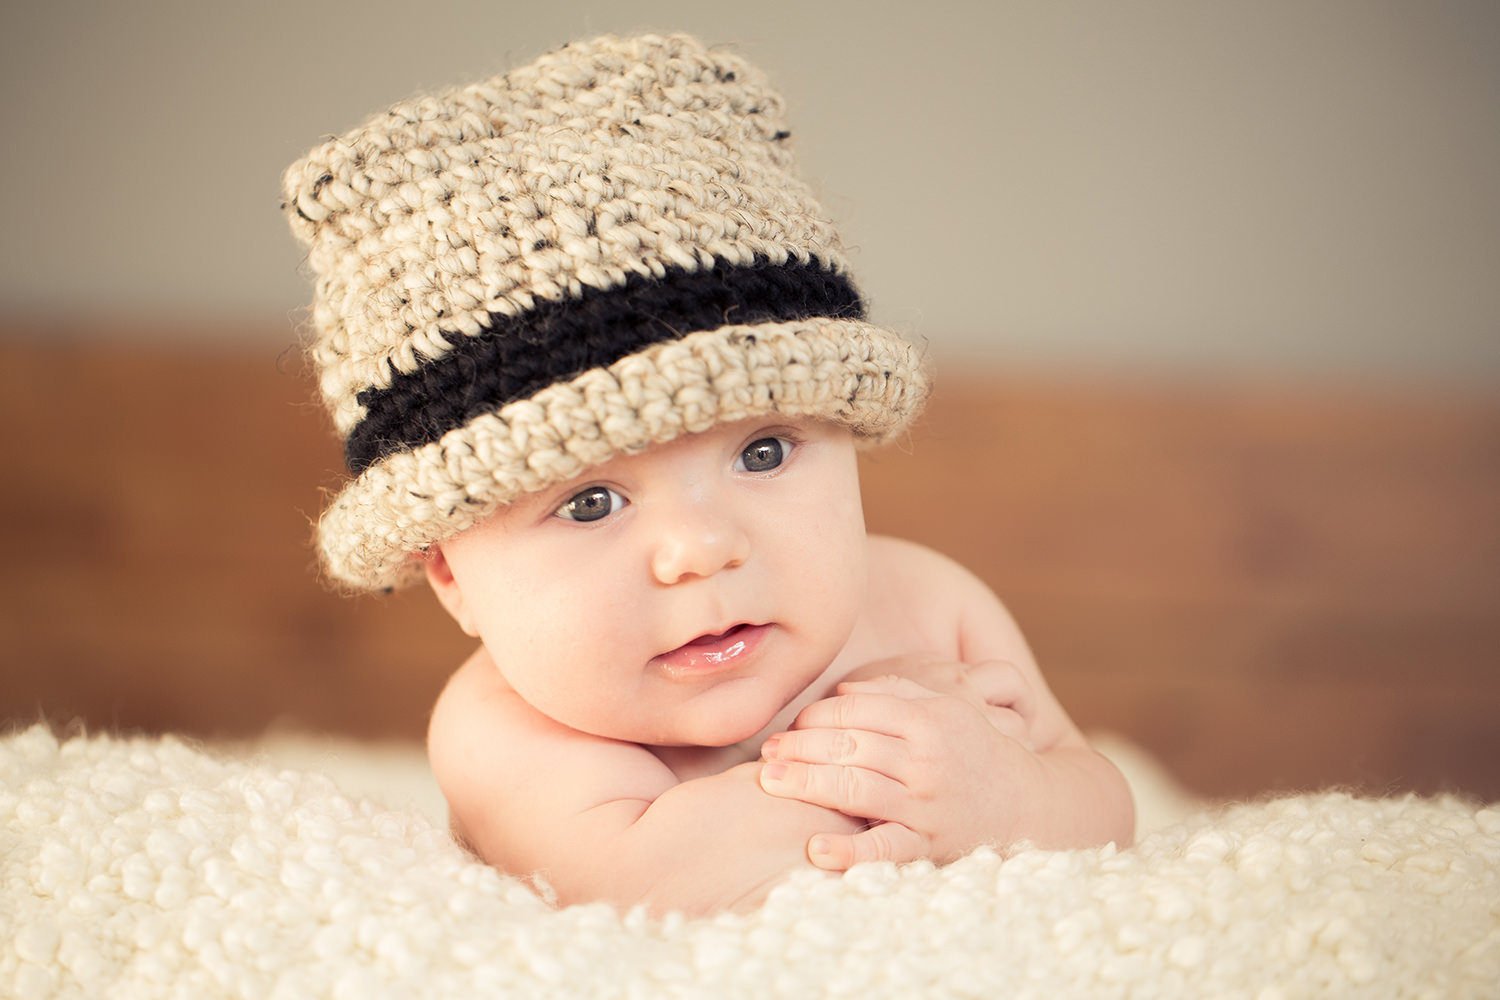 san diego newborn photographer | baby boy newborn with cute crocheted hat